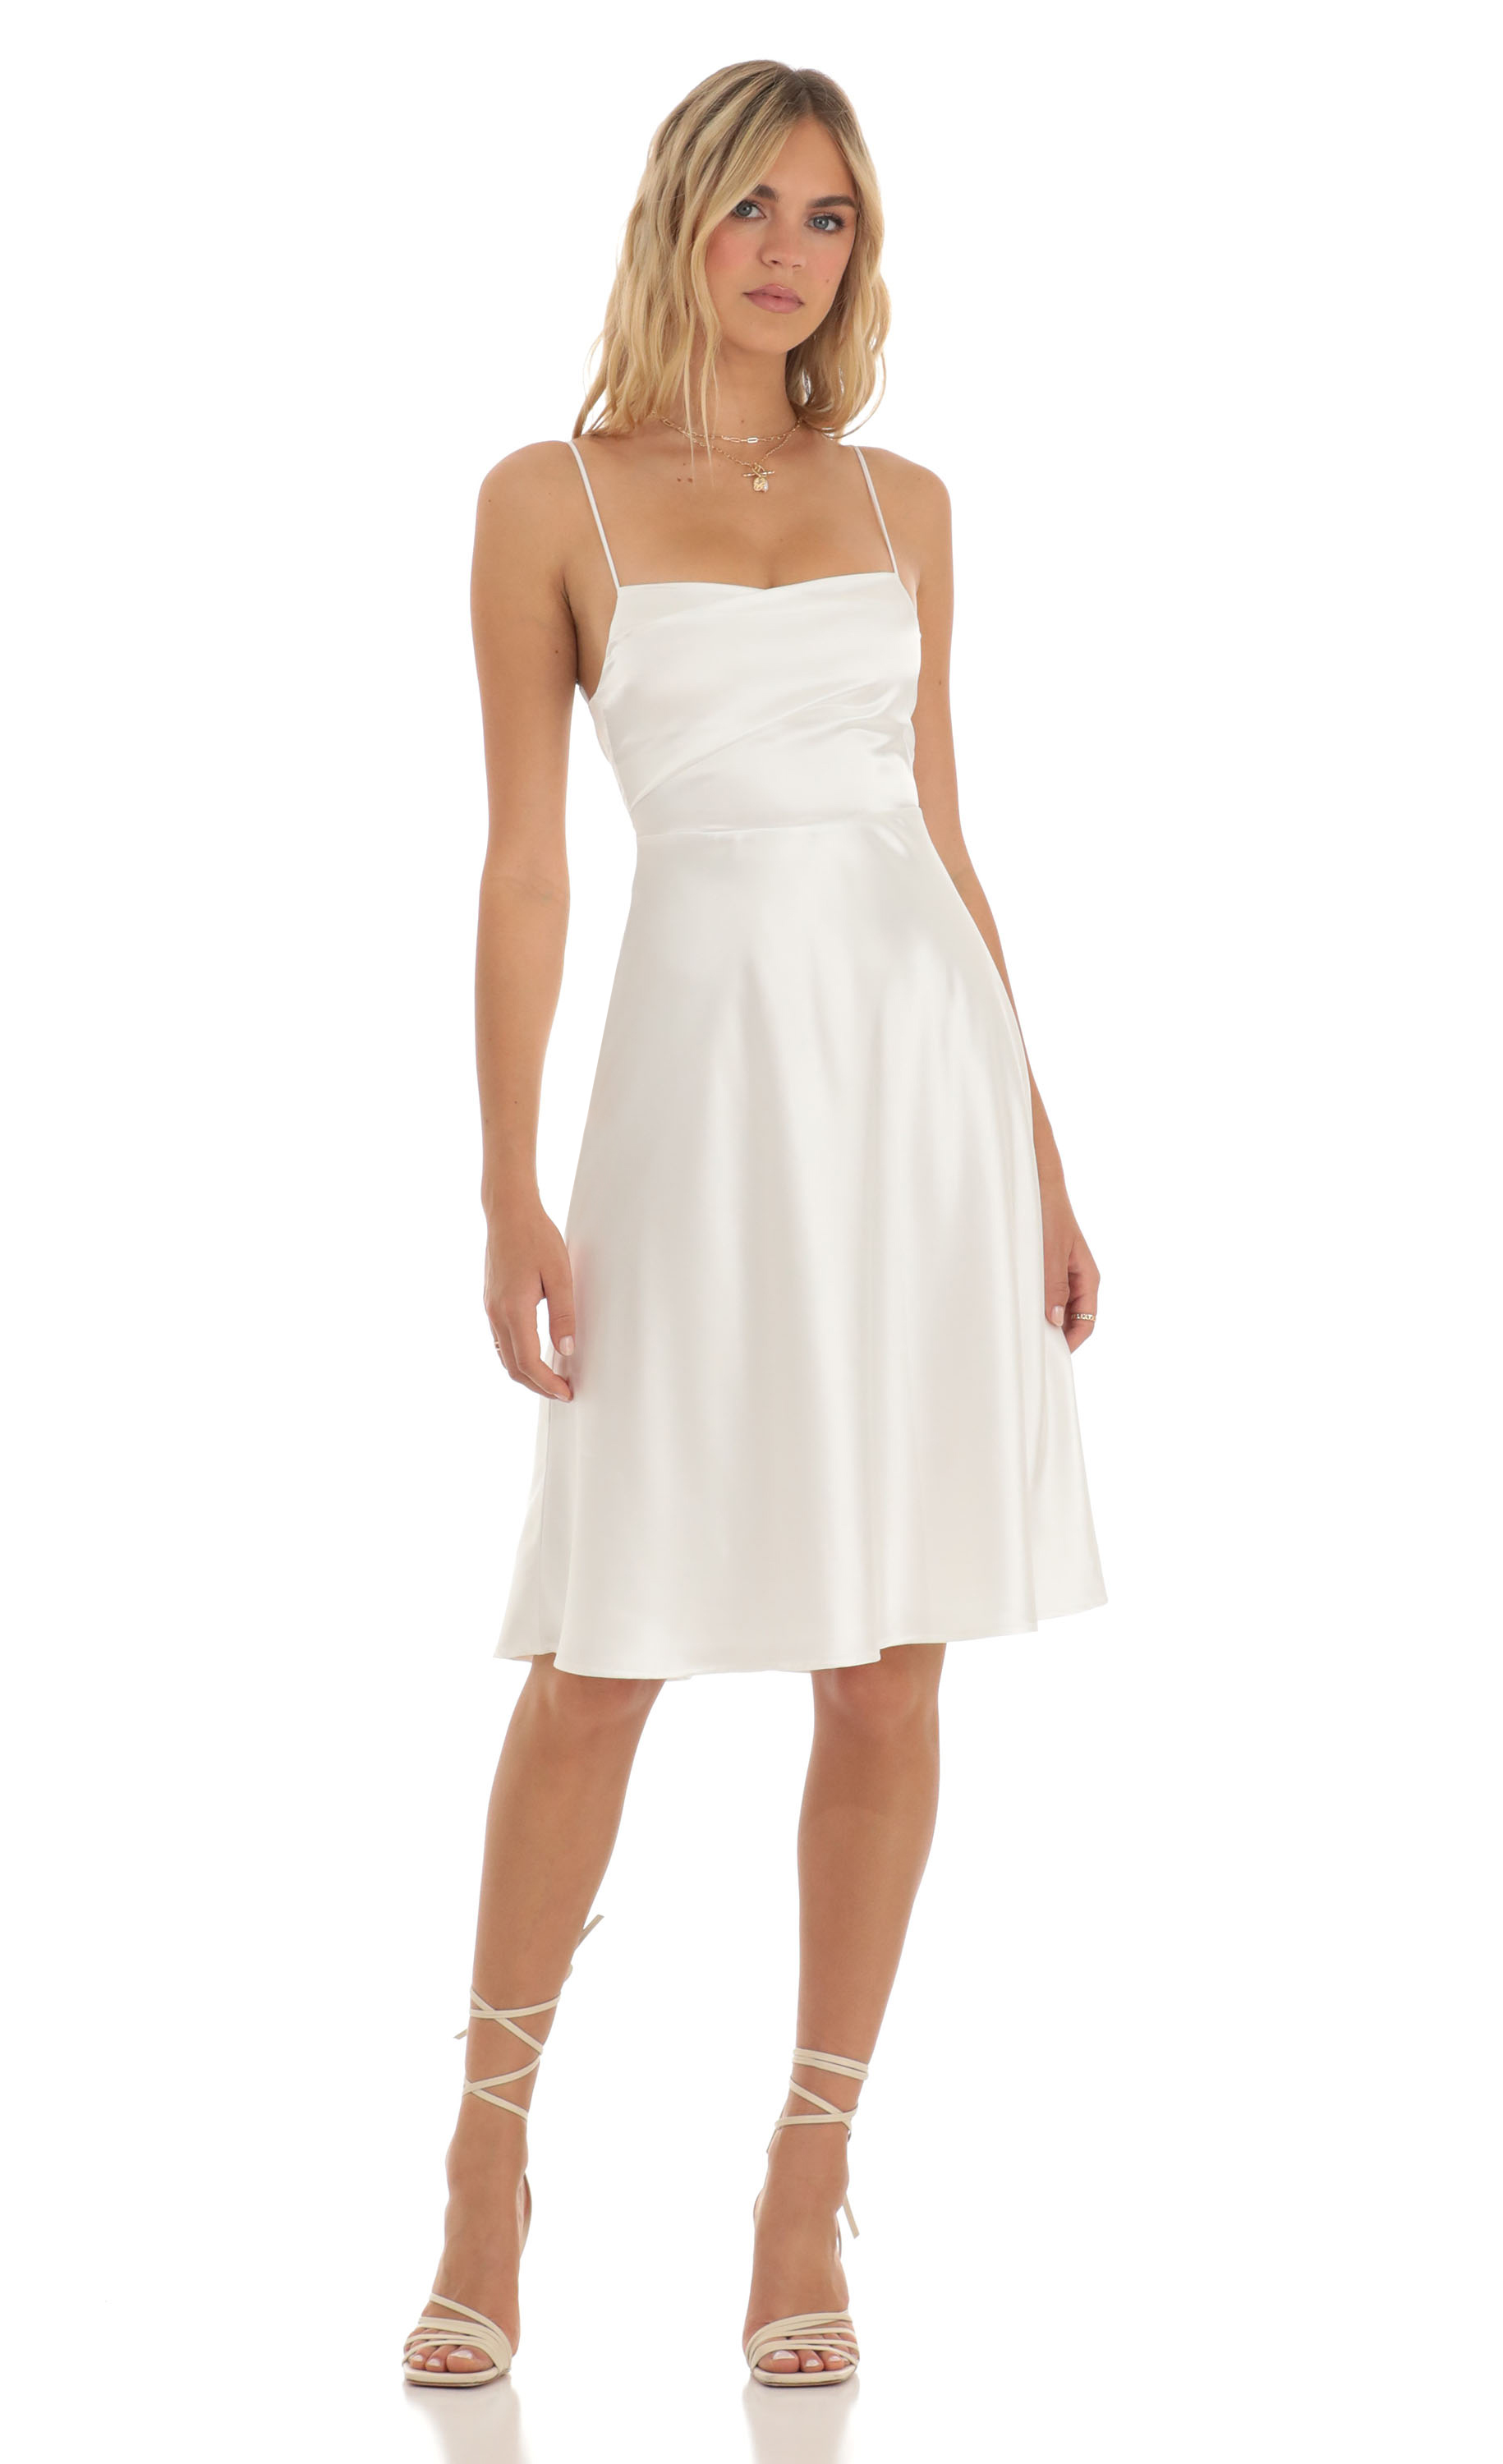 Finnian Midi Dress in White